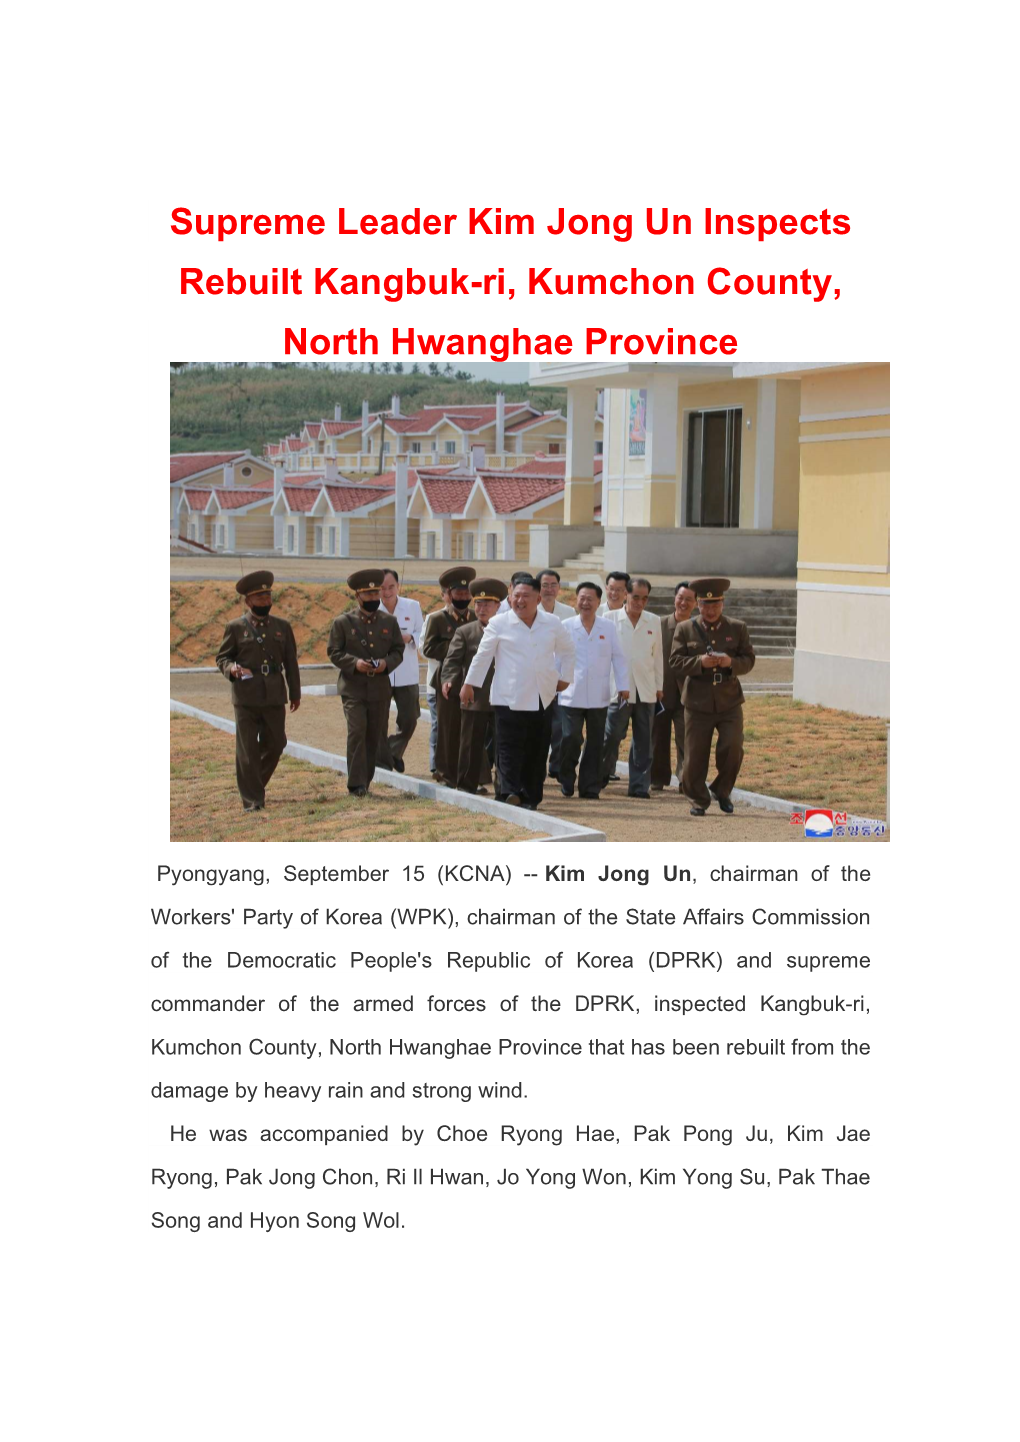 Supreme Leader Kim Jong Un Inspects Rebuilt Kangbuk-Ri, Kumchon County, North Hwanghae Province